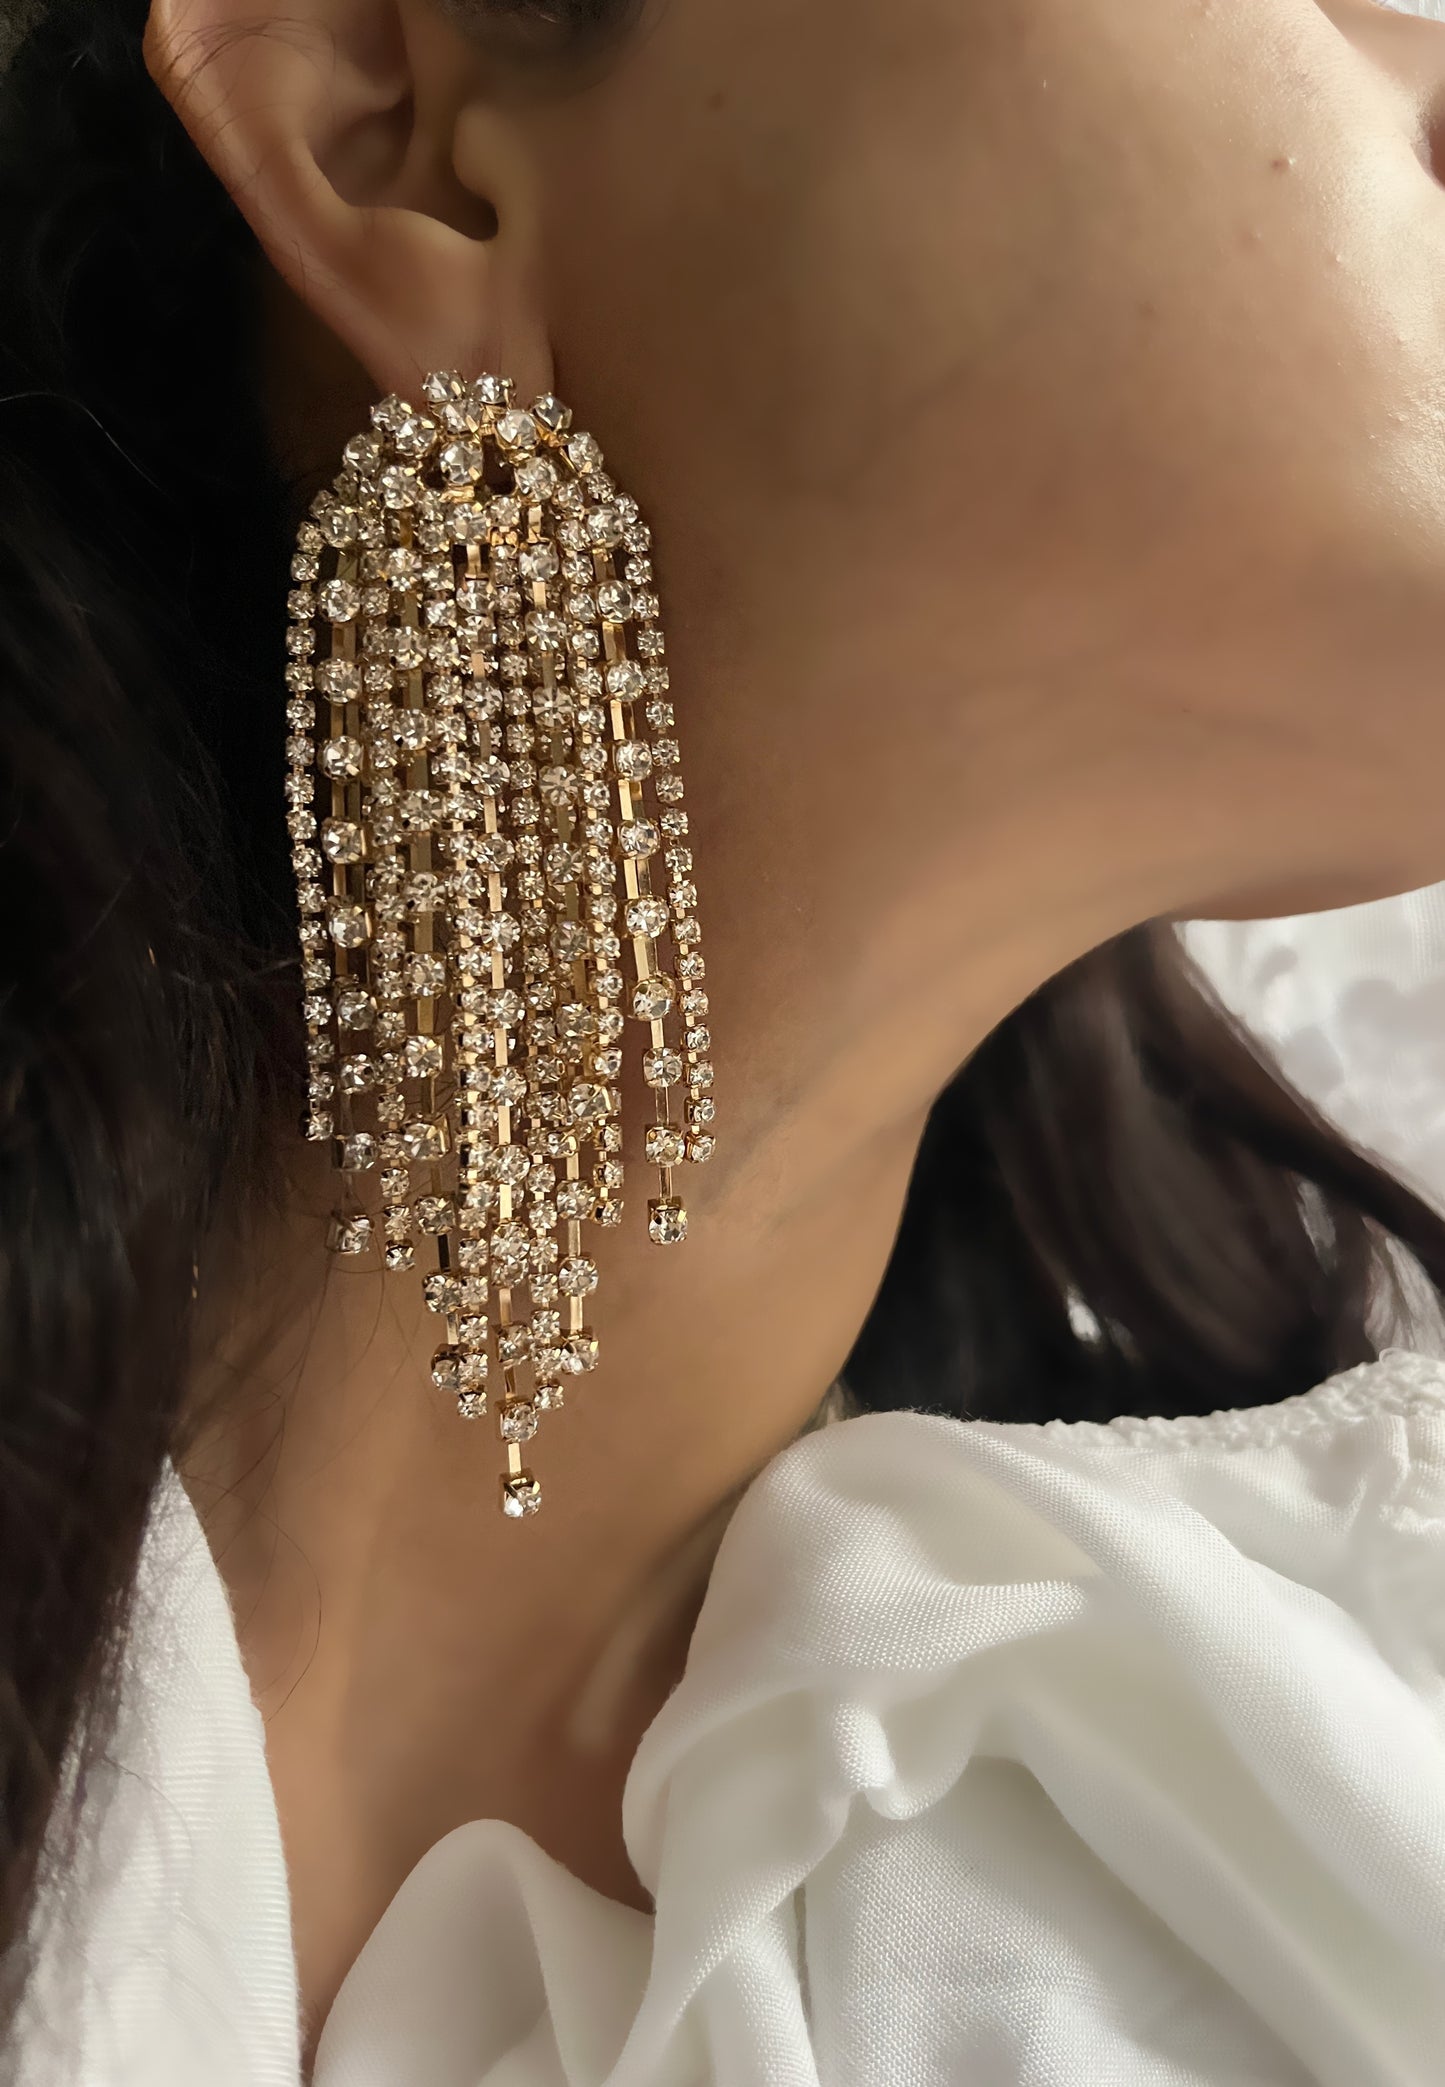 Hanna Khan In The Diva Earrings